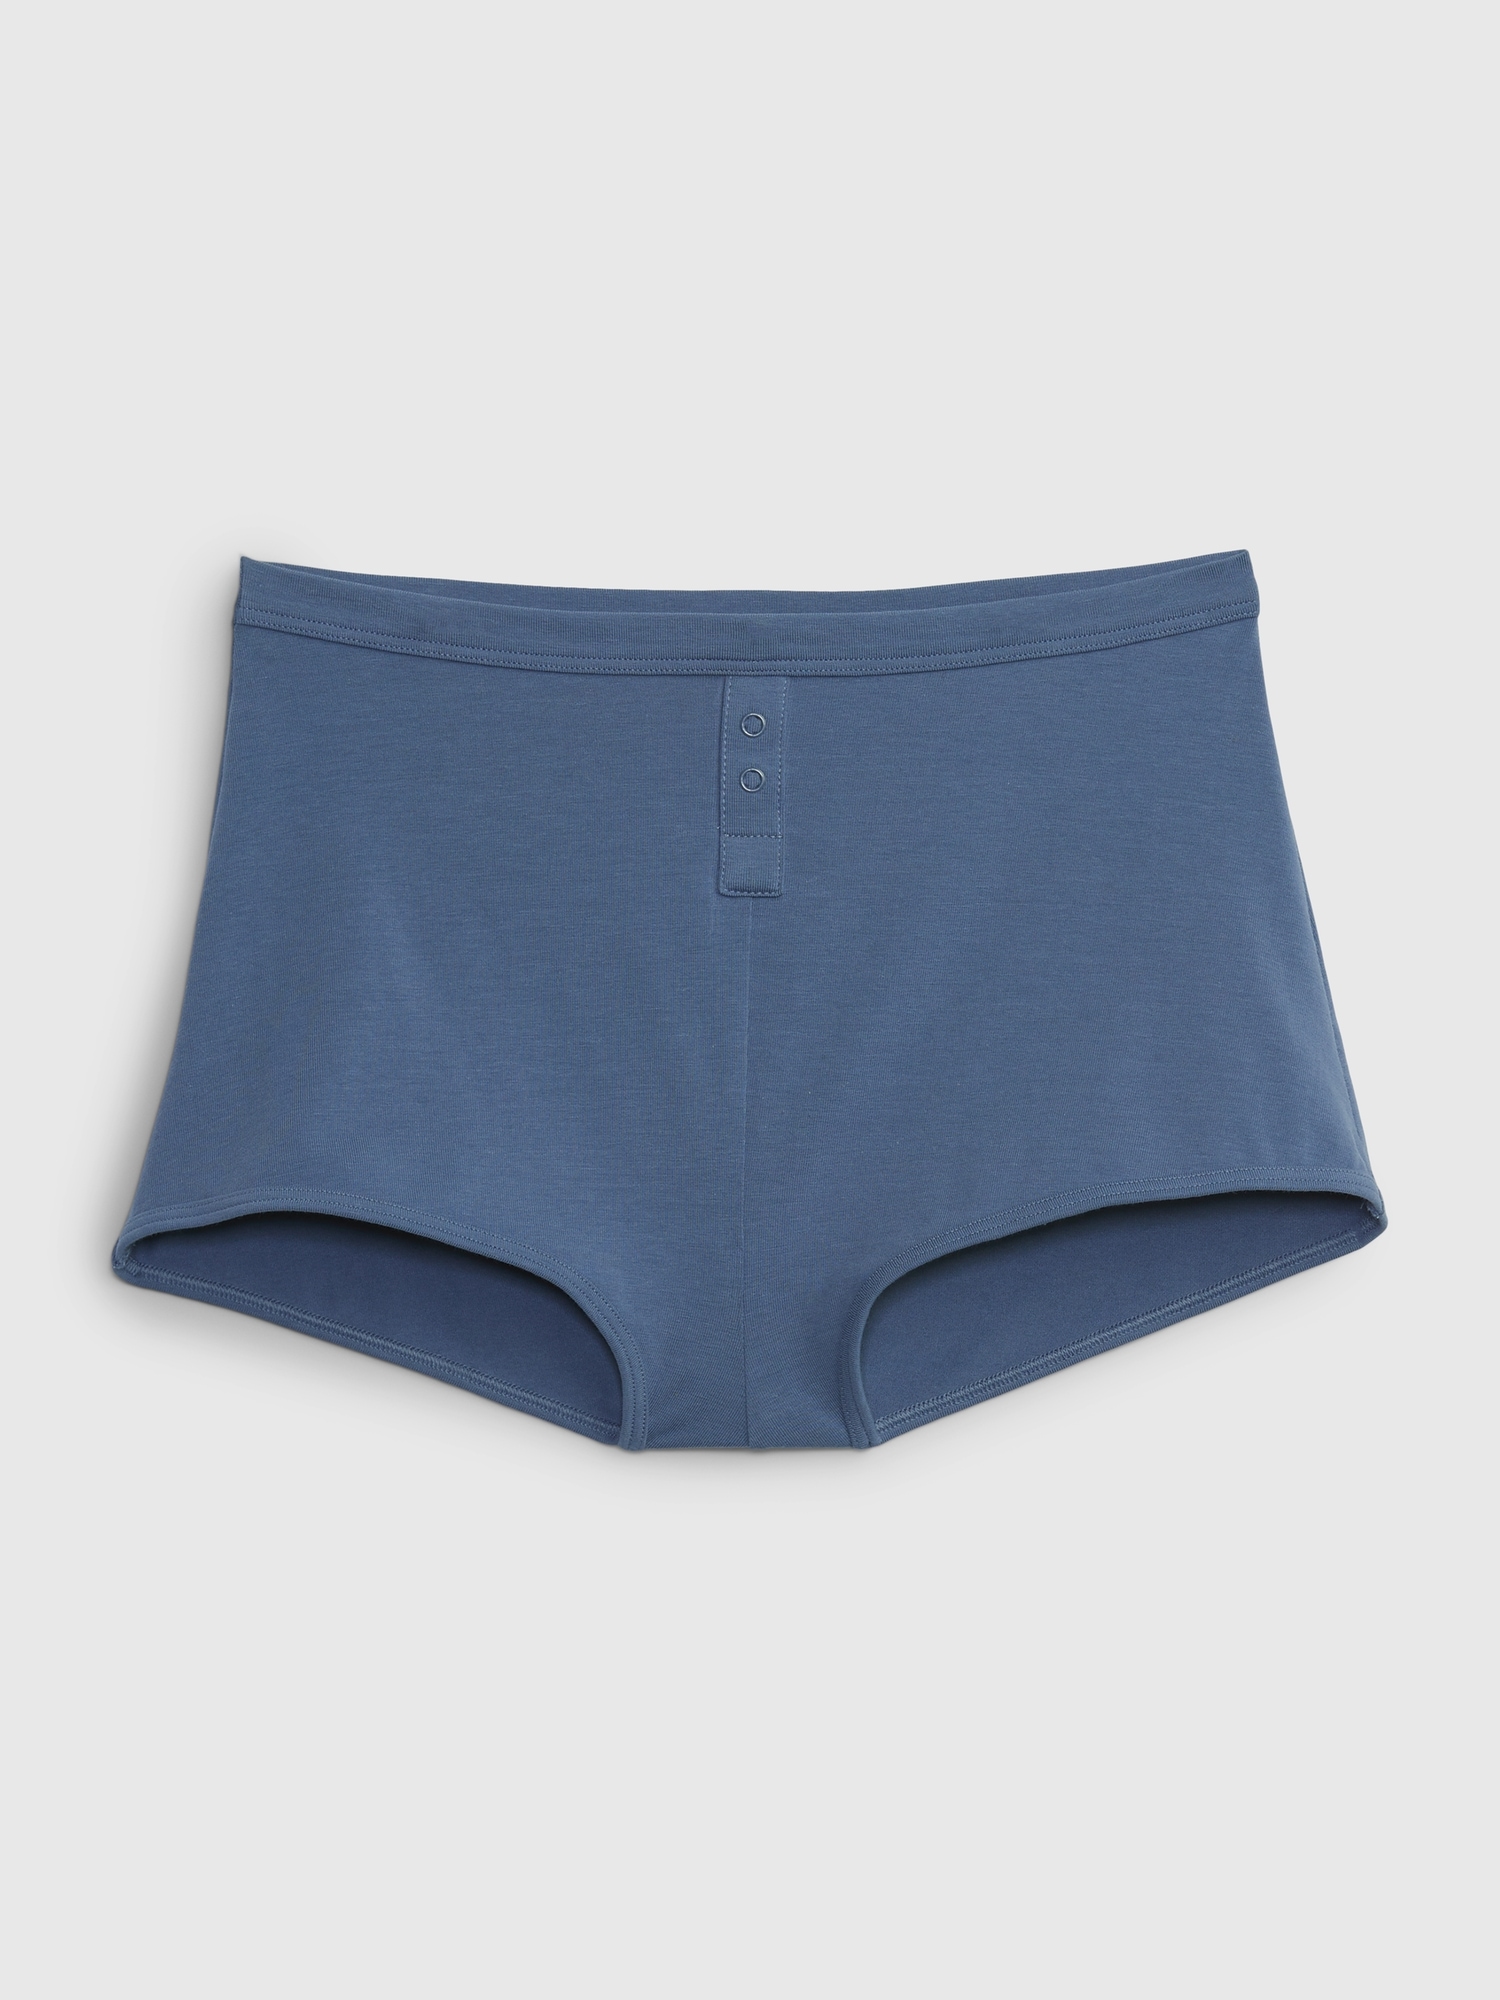 Gap Boy Shorts Underwear